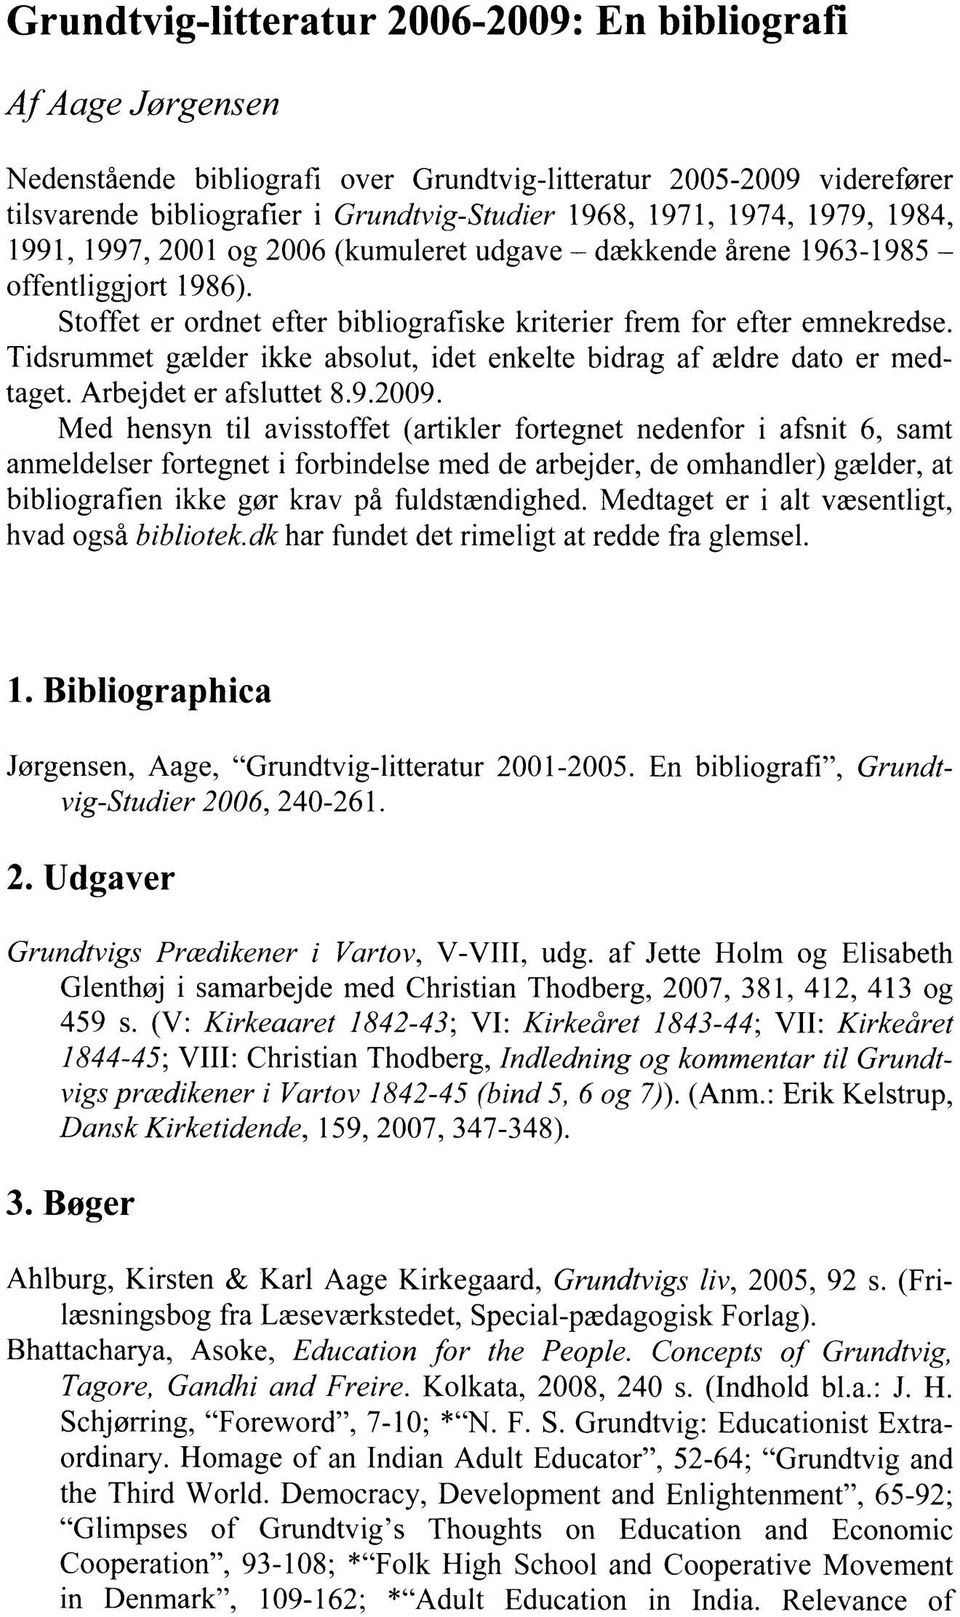 Grundtvig-litteratur : bibliografi - PDF Gratis